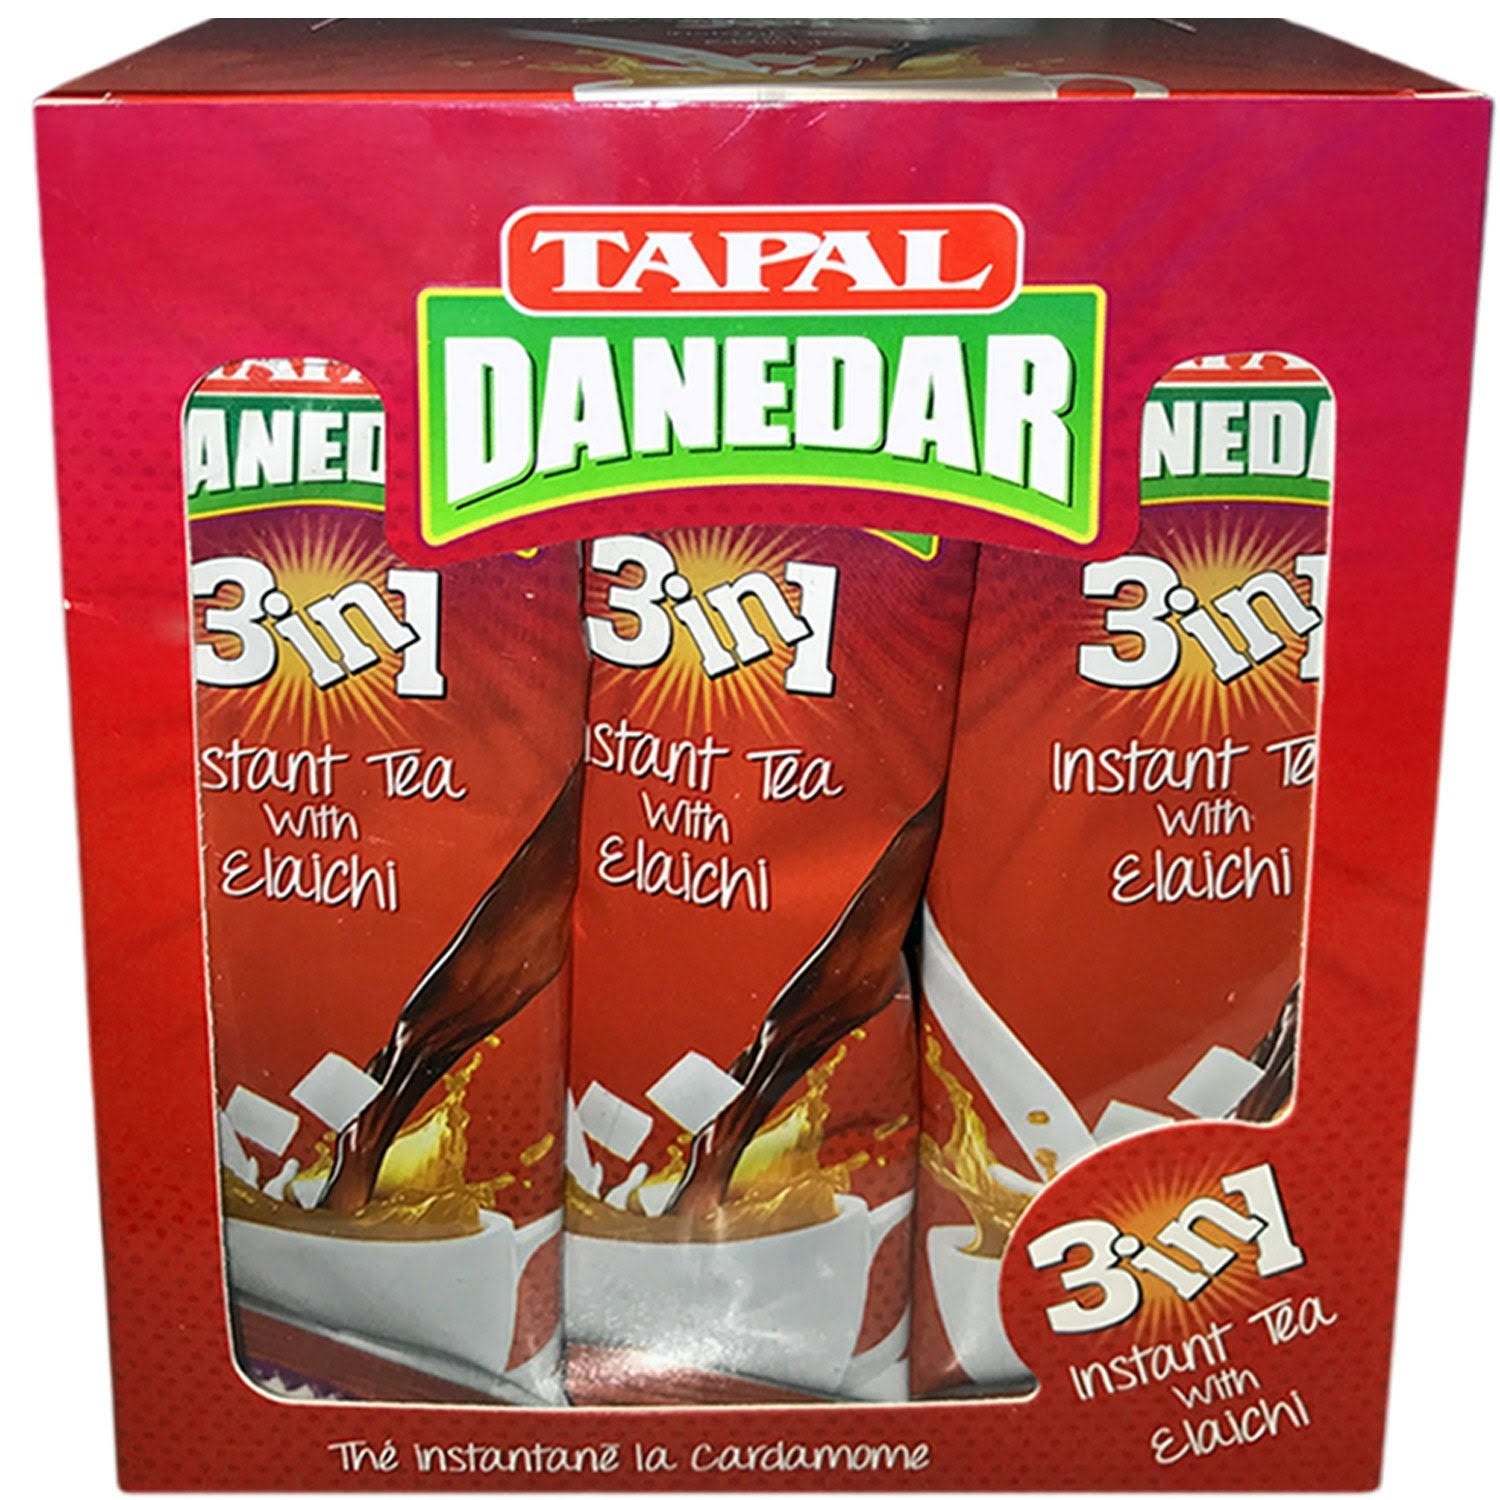 Tapal Danedar 3 in 1 Instant Tea - x10, with Elaichi